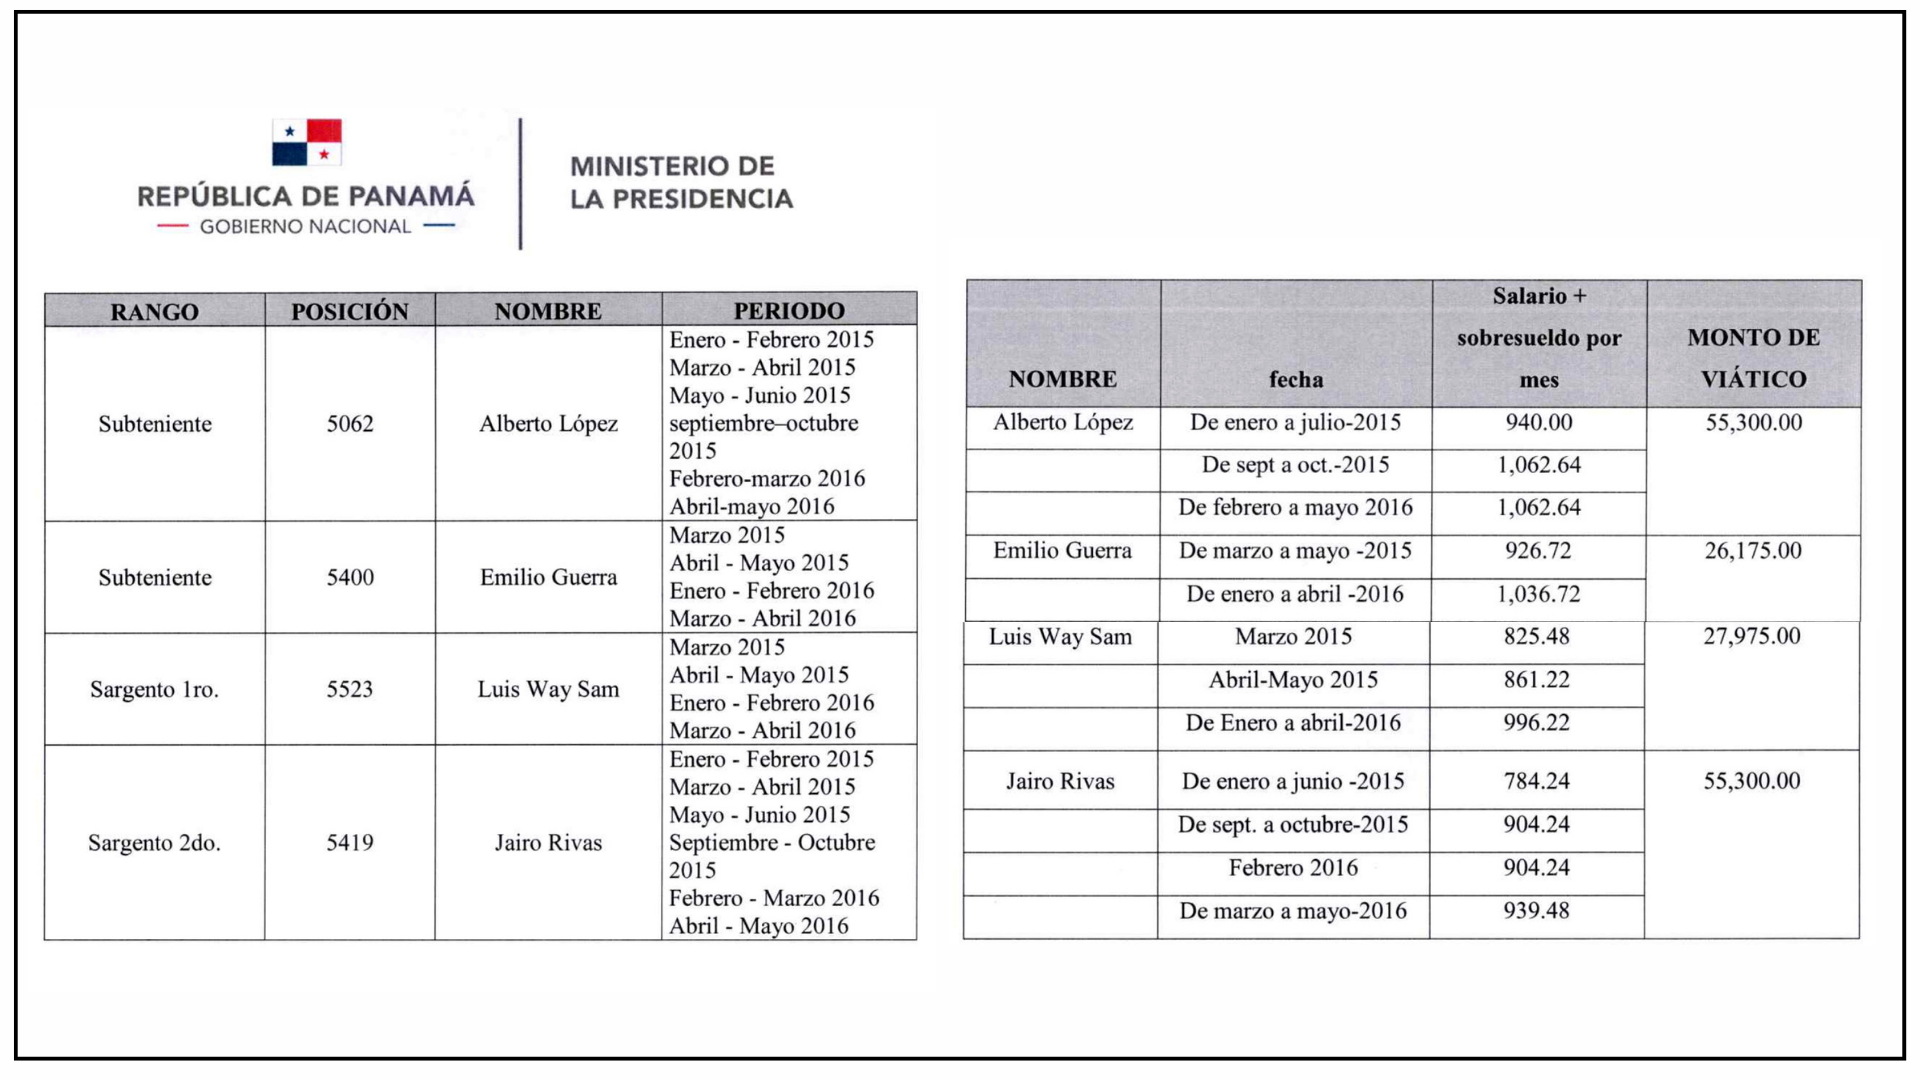 Sí hubo unidades del SPI asignadas a Gian Varela Castillo, entre 2015-2016